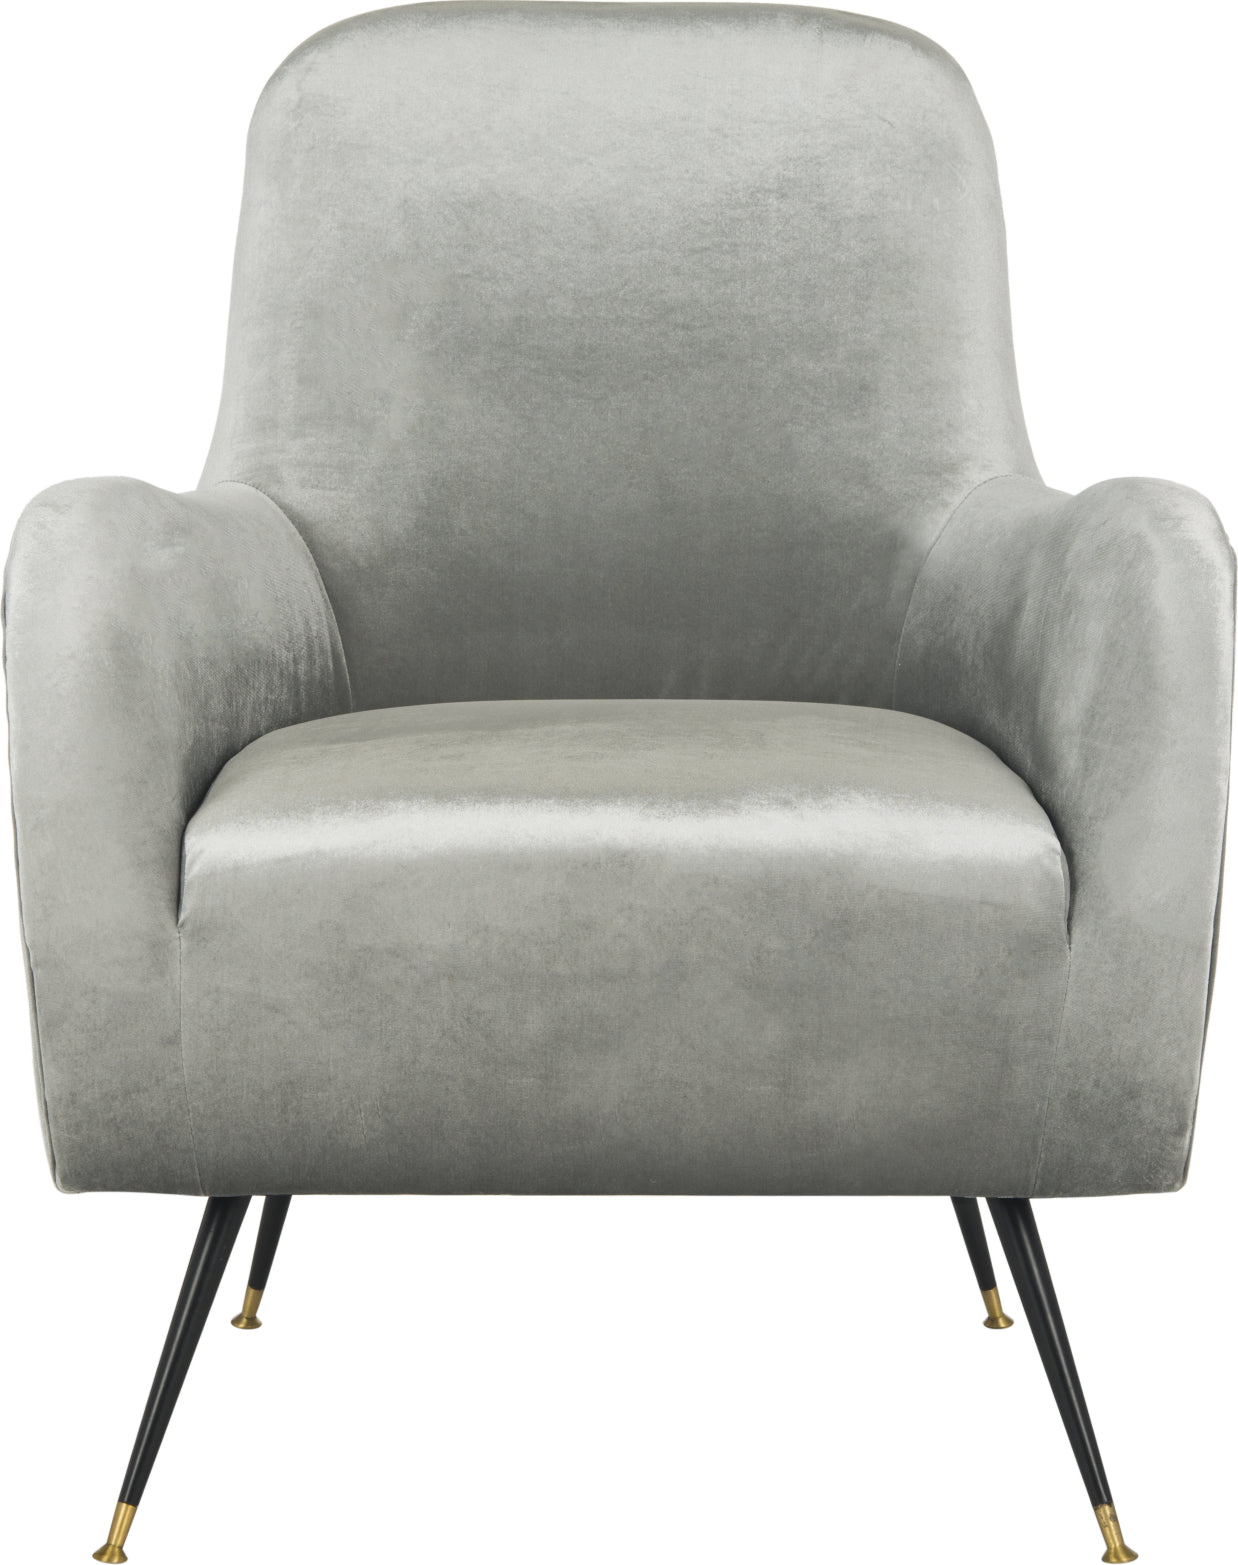 Safavieh Noelle Velvet Retro Mid Century Accent Chair Light Grey Furniture main image